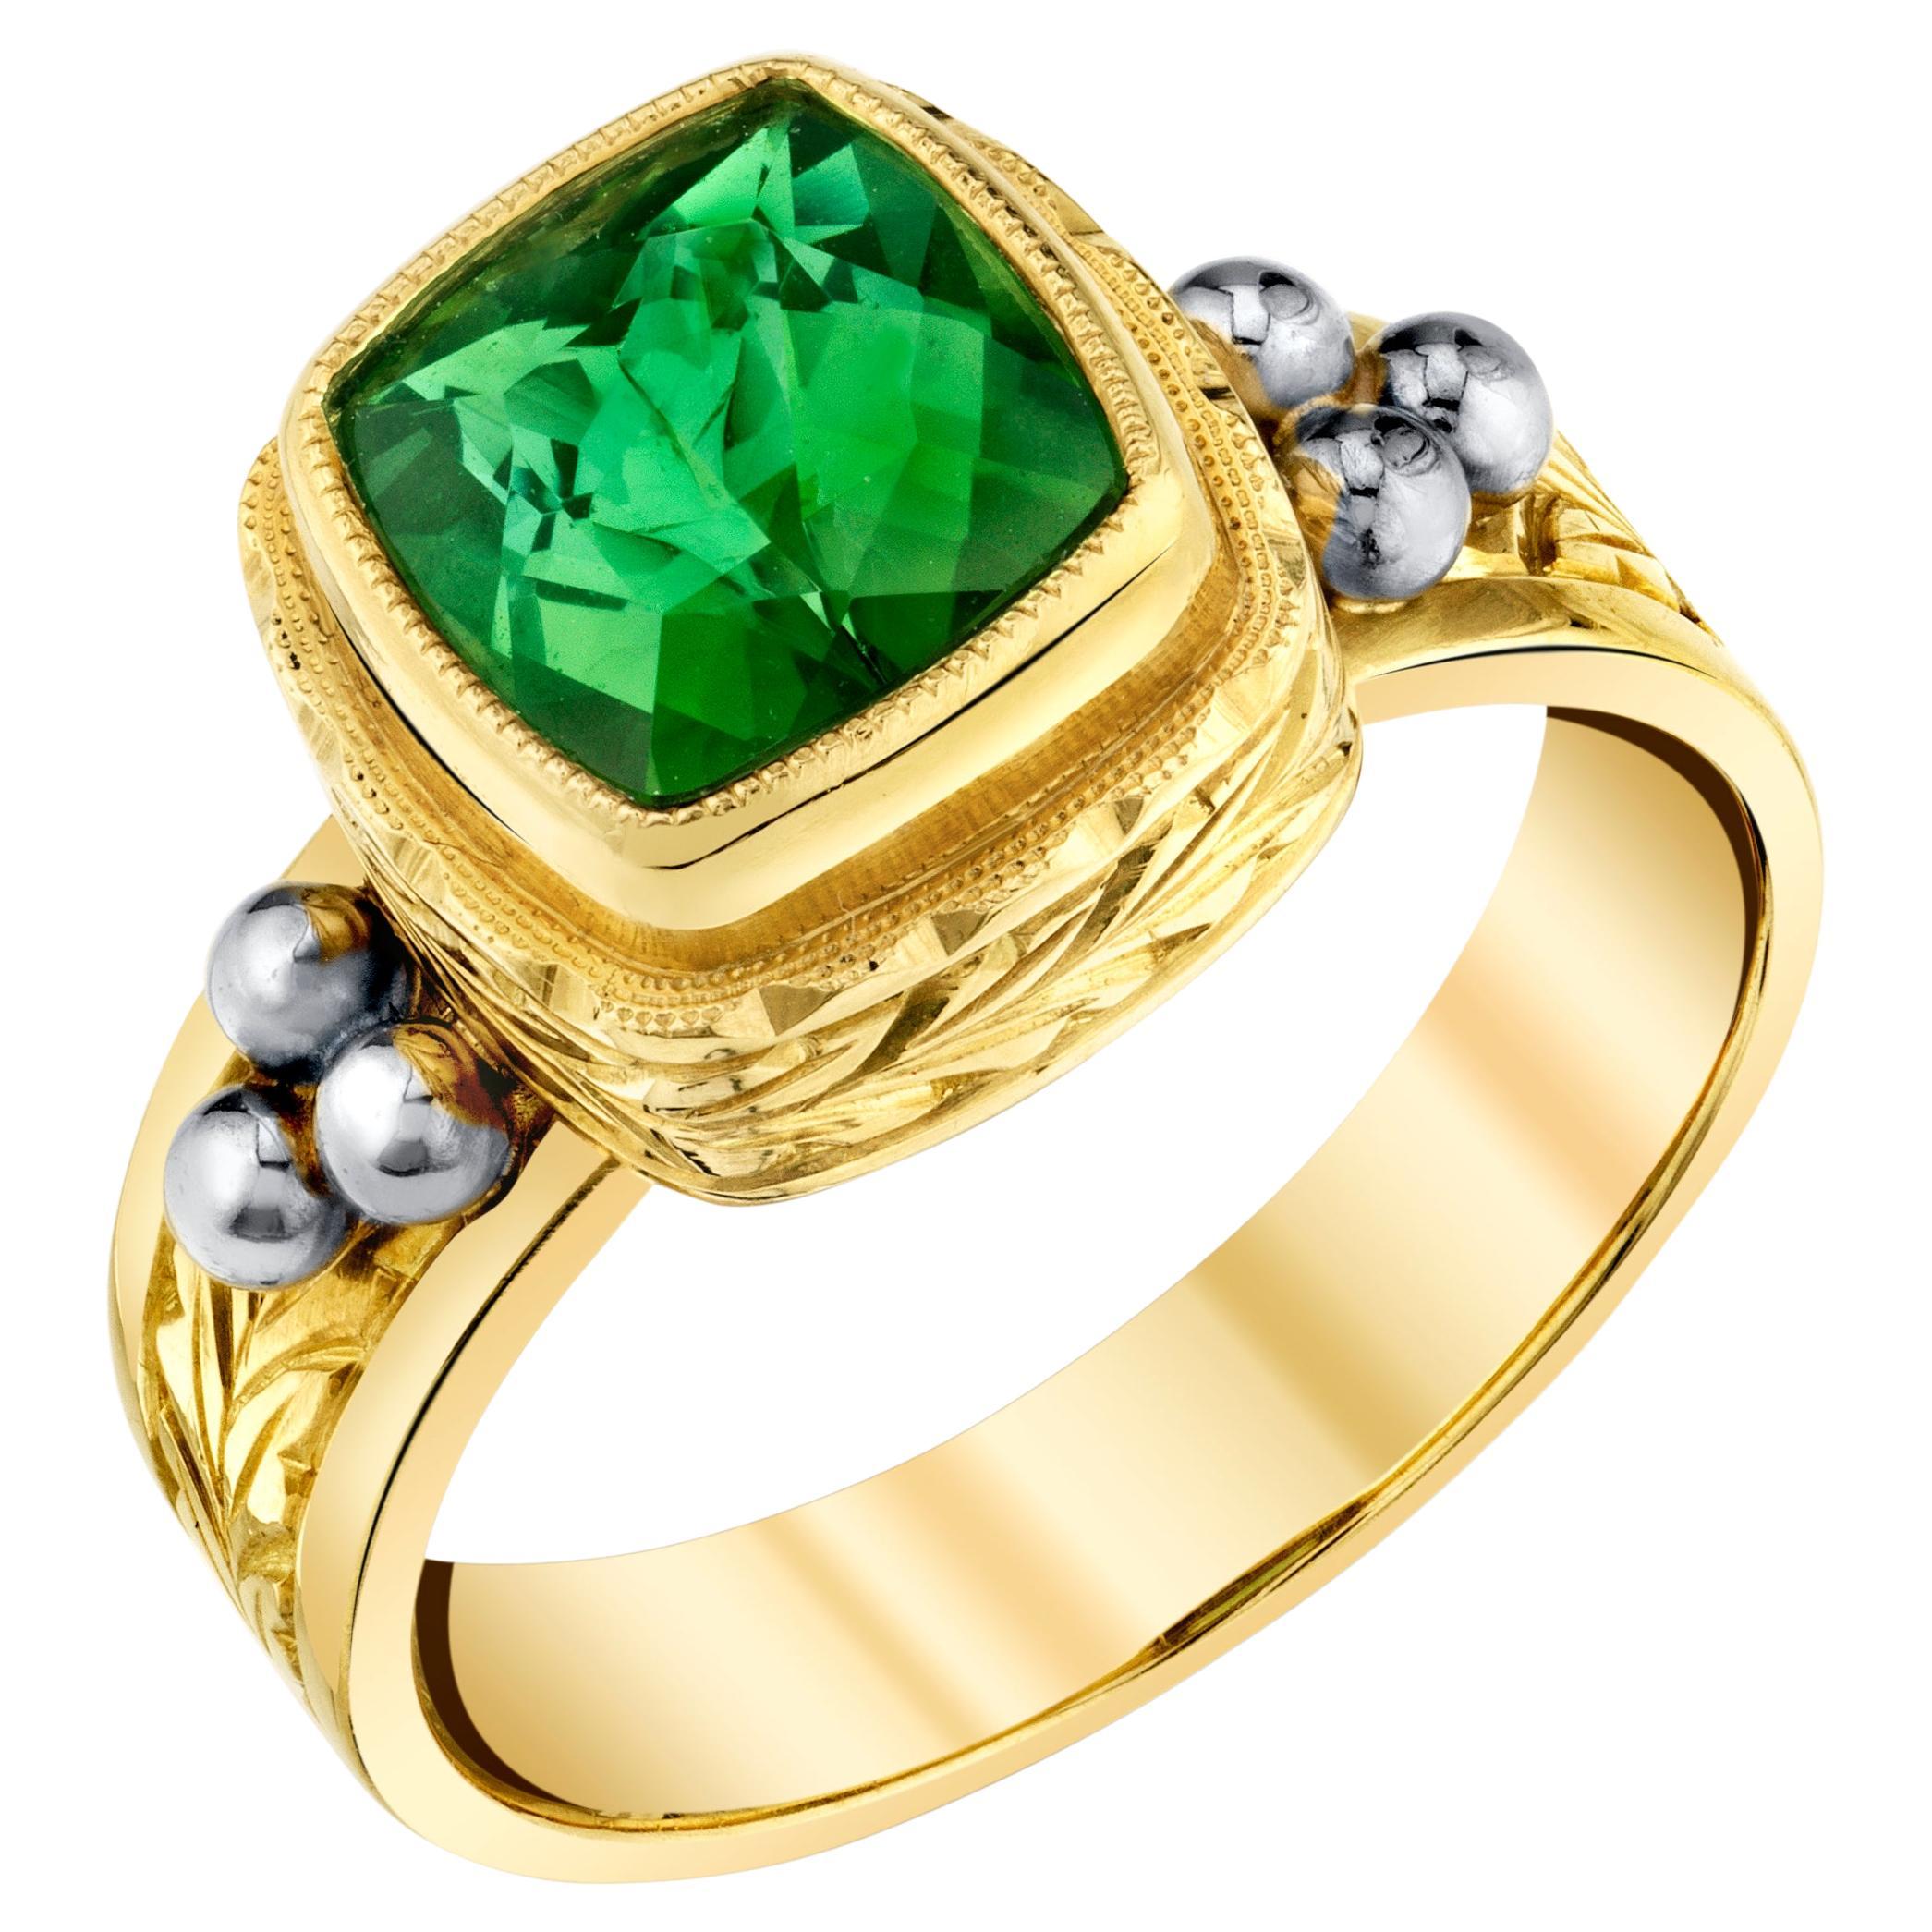 Green Tourmaline and Handmade 18k Yellow Gold Band Ring, 1.83 Carats